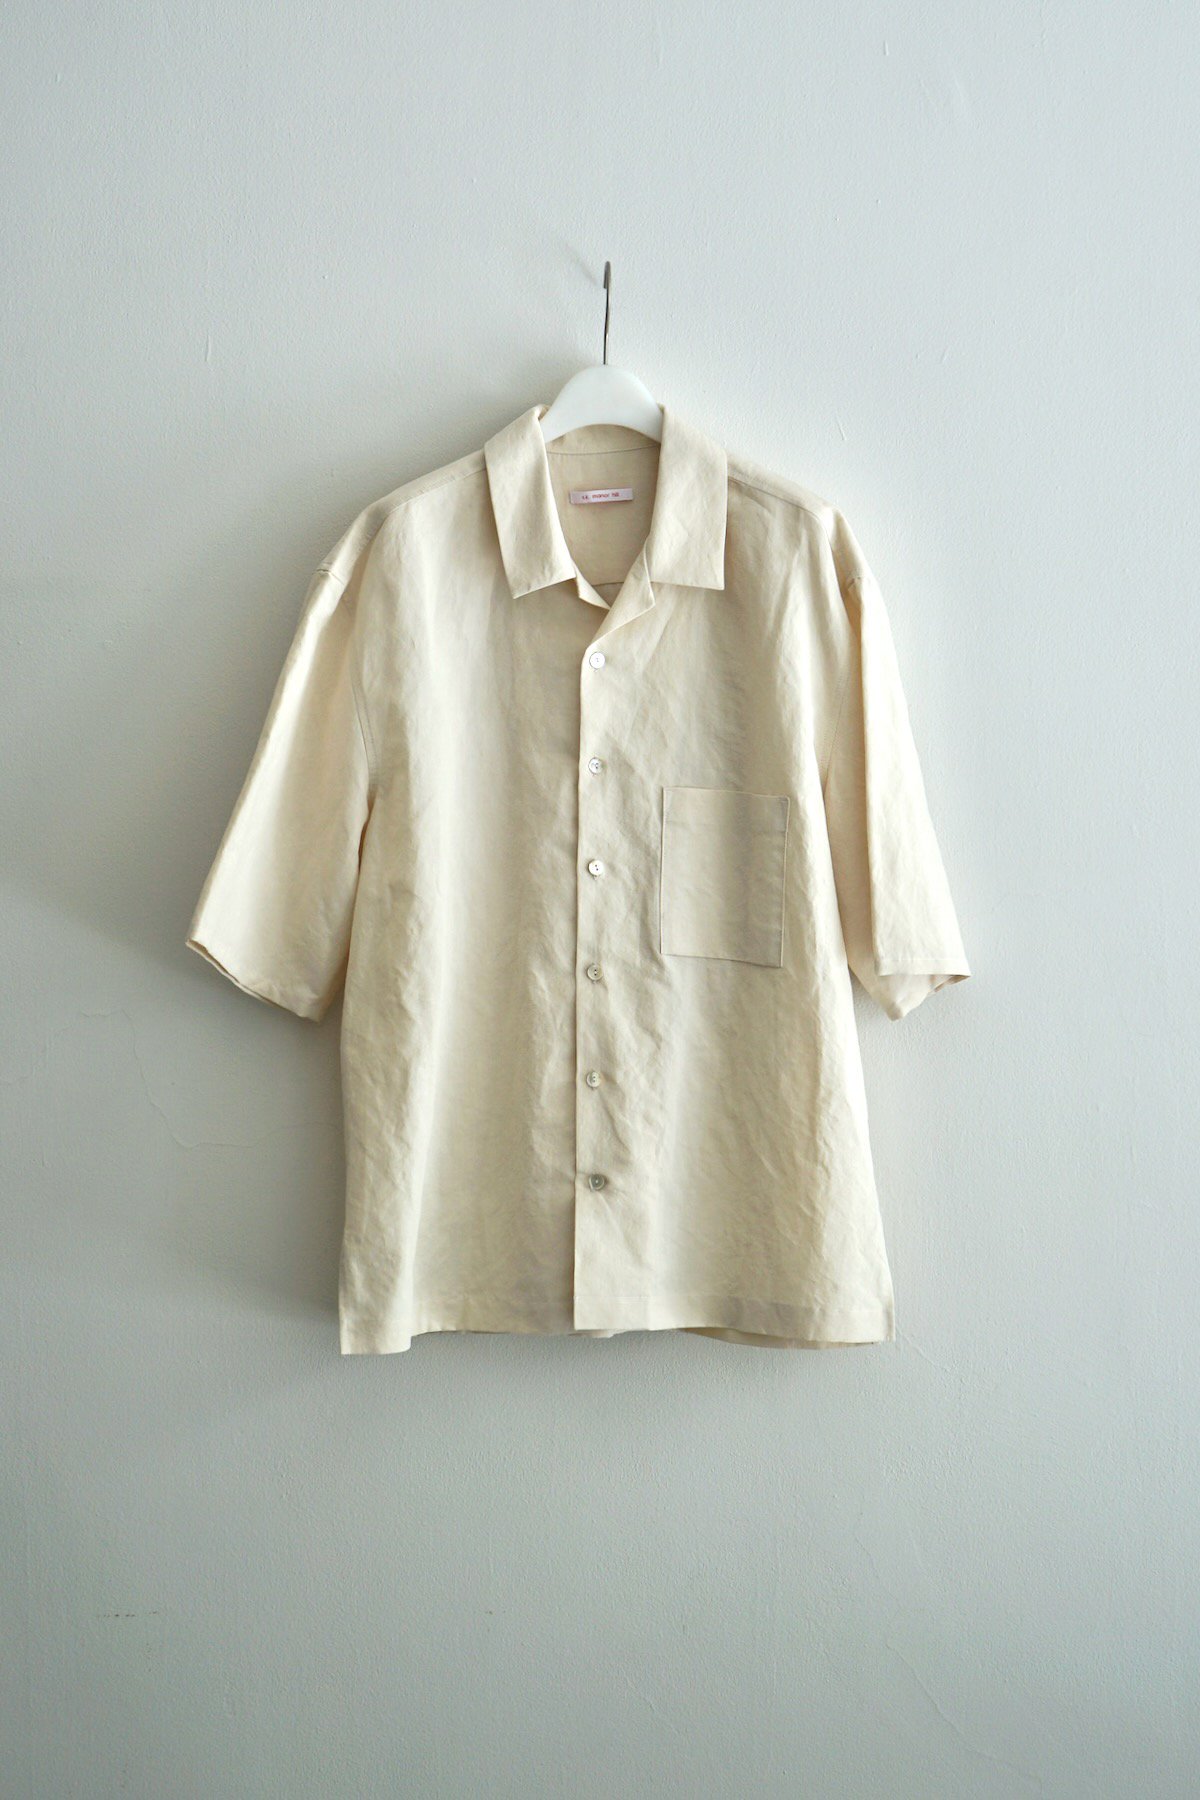 s.k. manor hill / Aloha Shirt / Bone Linen Cotton